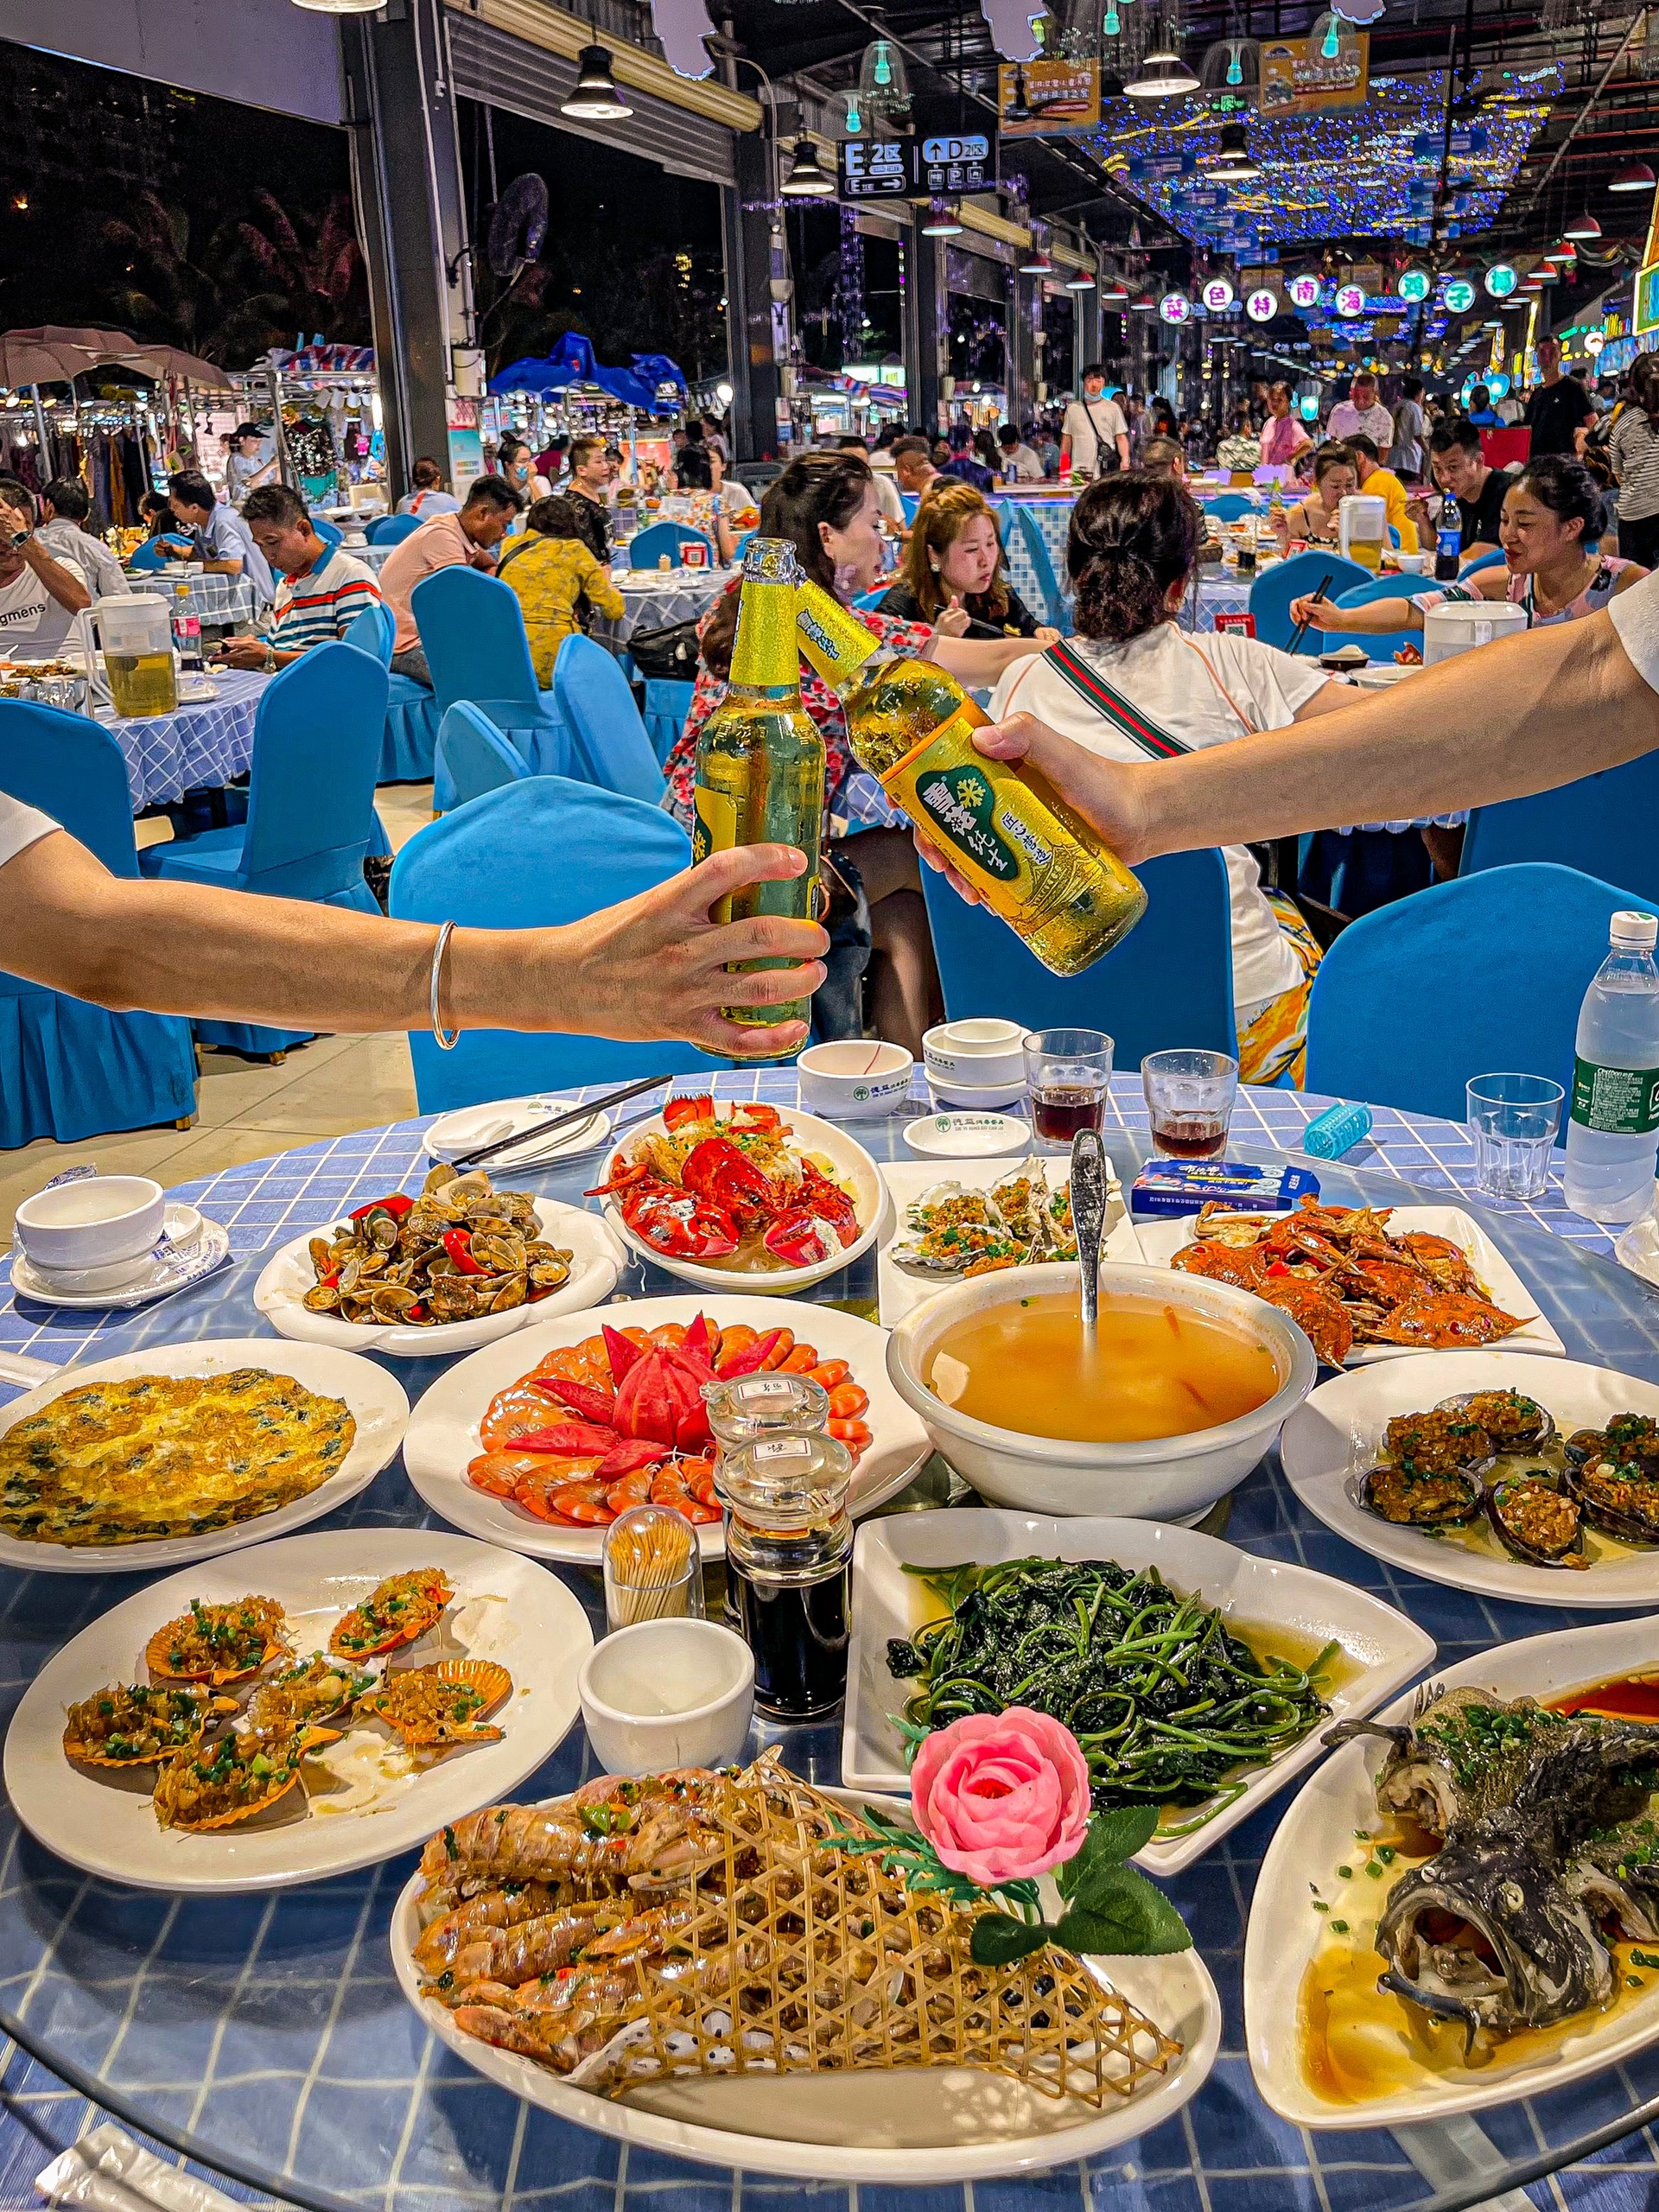 Sanya Yiheng Theme Night Market